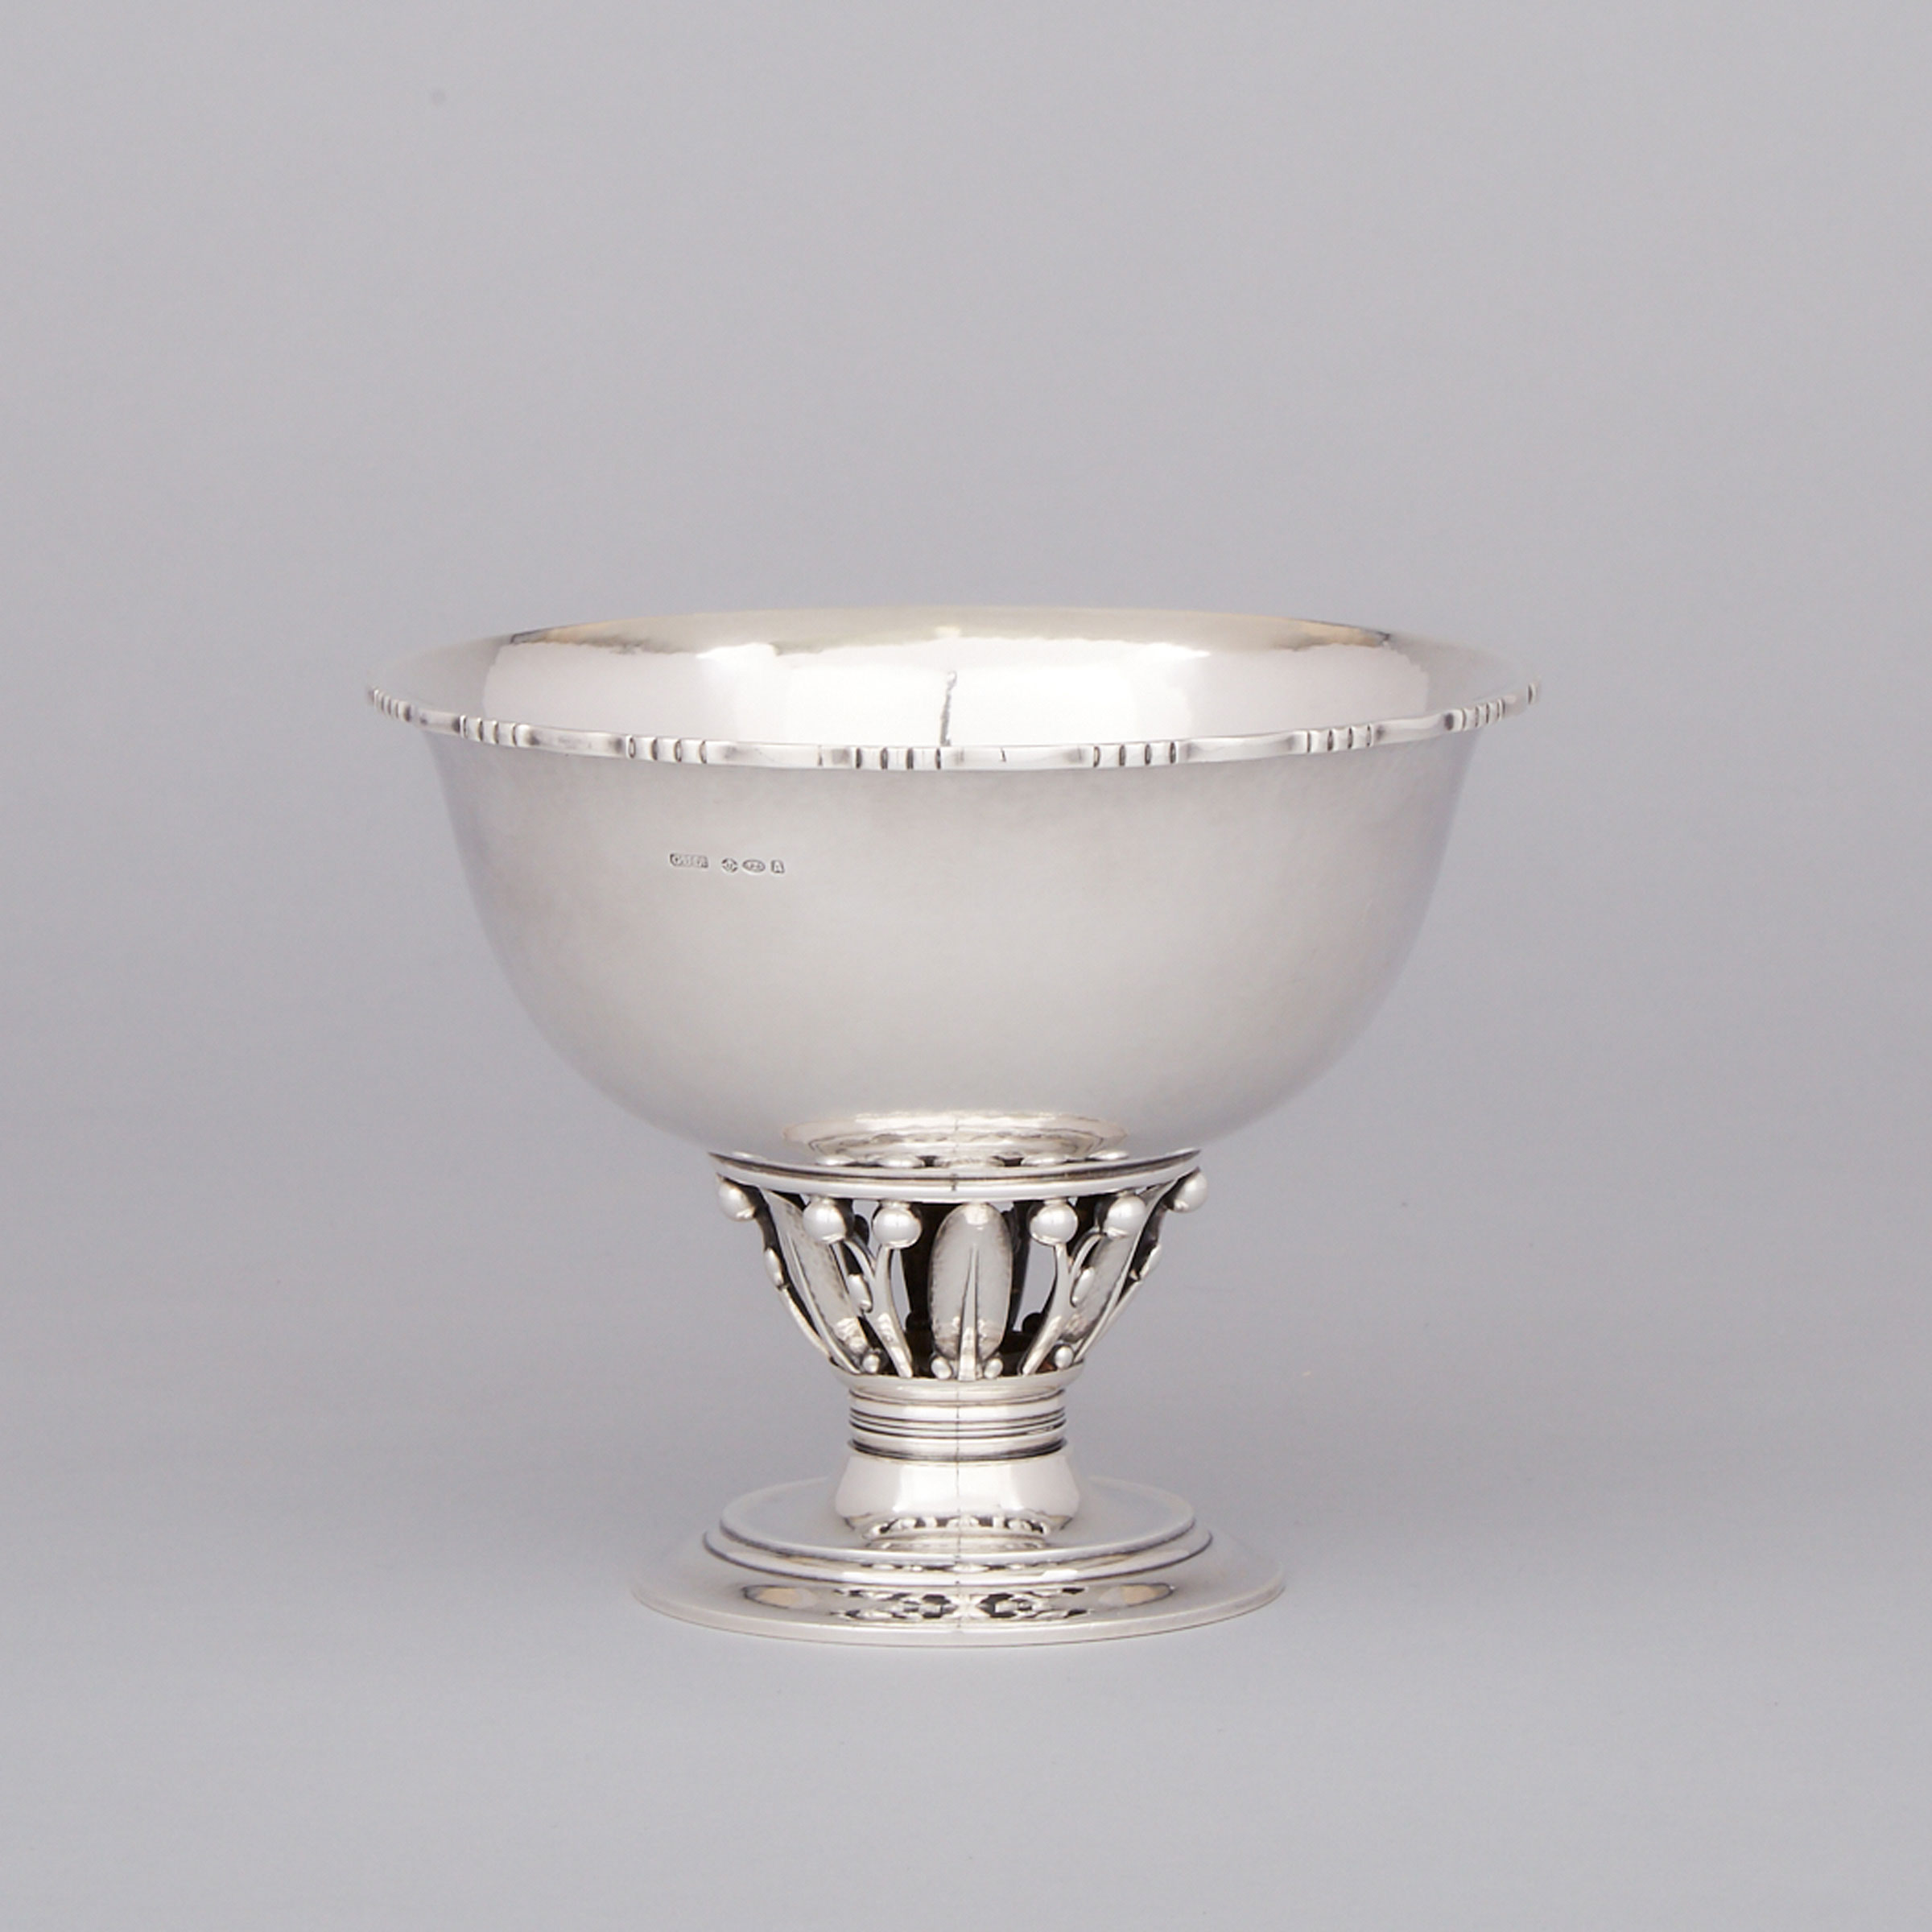 Danish Silver ‘Louvre’ Footed Bowl, #180B, Georg Jensen, Copenhagen, c.1936